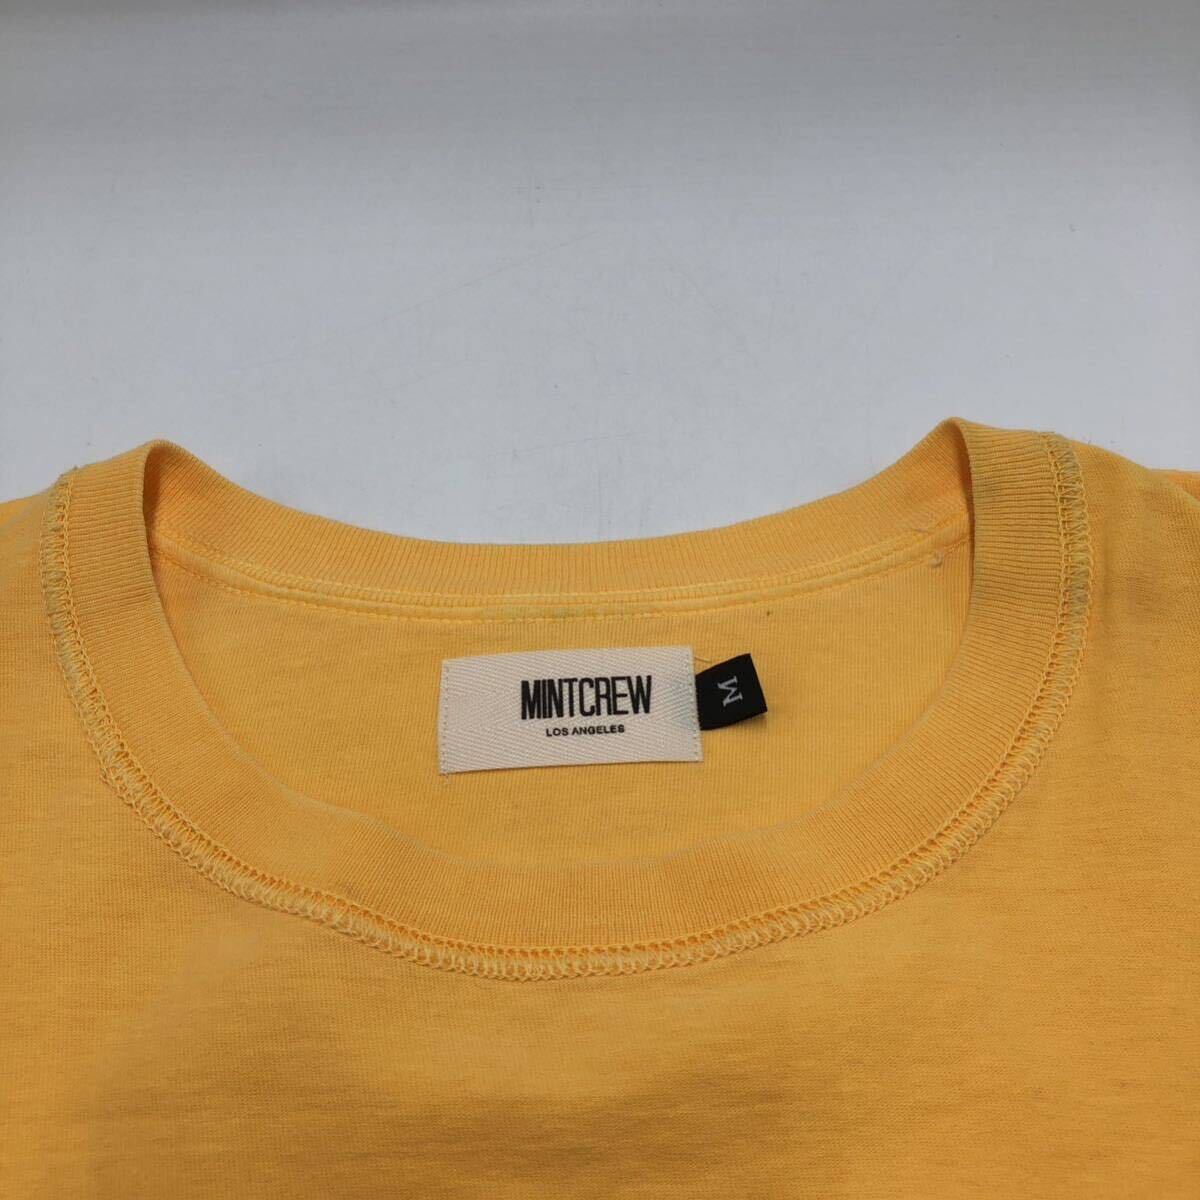 【M】Mint Crew Back Logo Print Tee Shirt Yellowミントクルー バック ロゴ プリント Tシャツ イエロー 黄色 半袖 T200_画像3